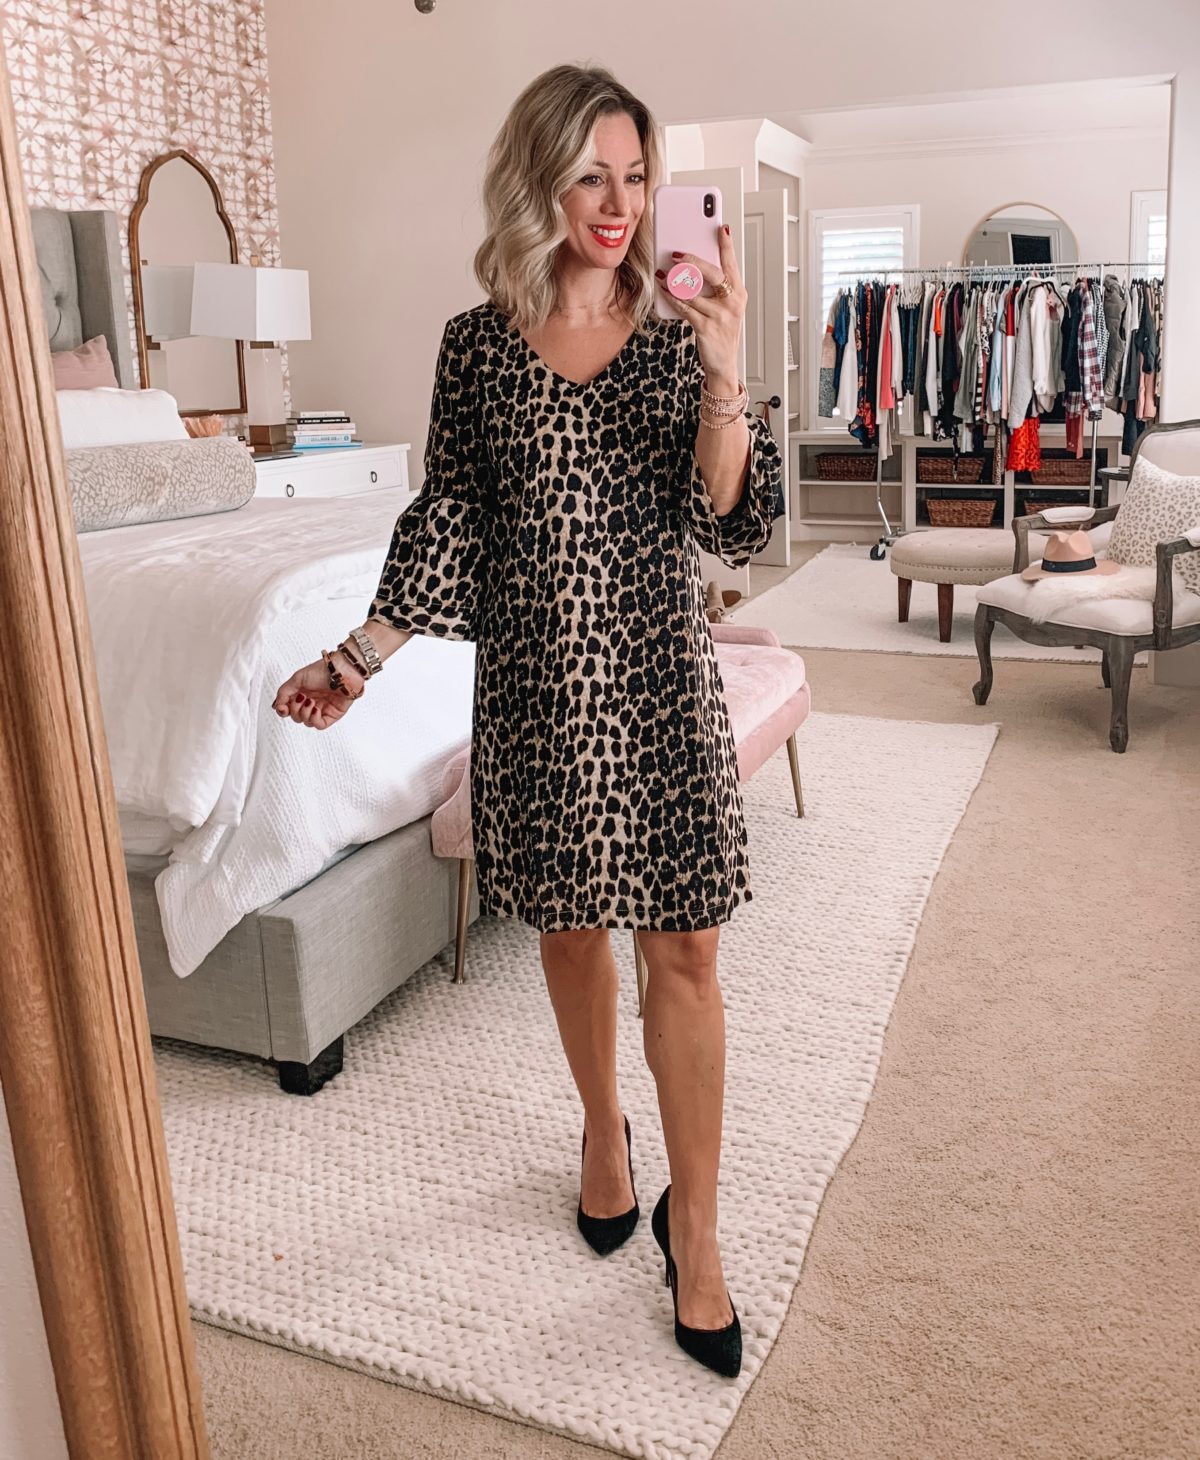 Amazon Prime Fashion- Leopard Dress 